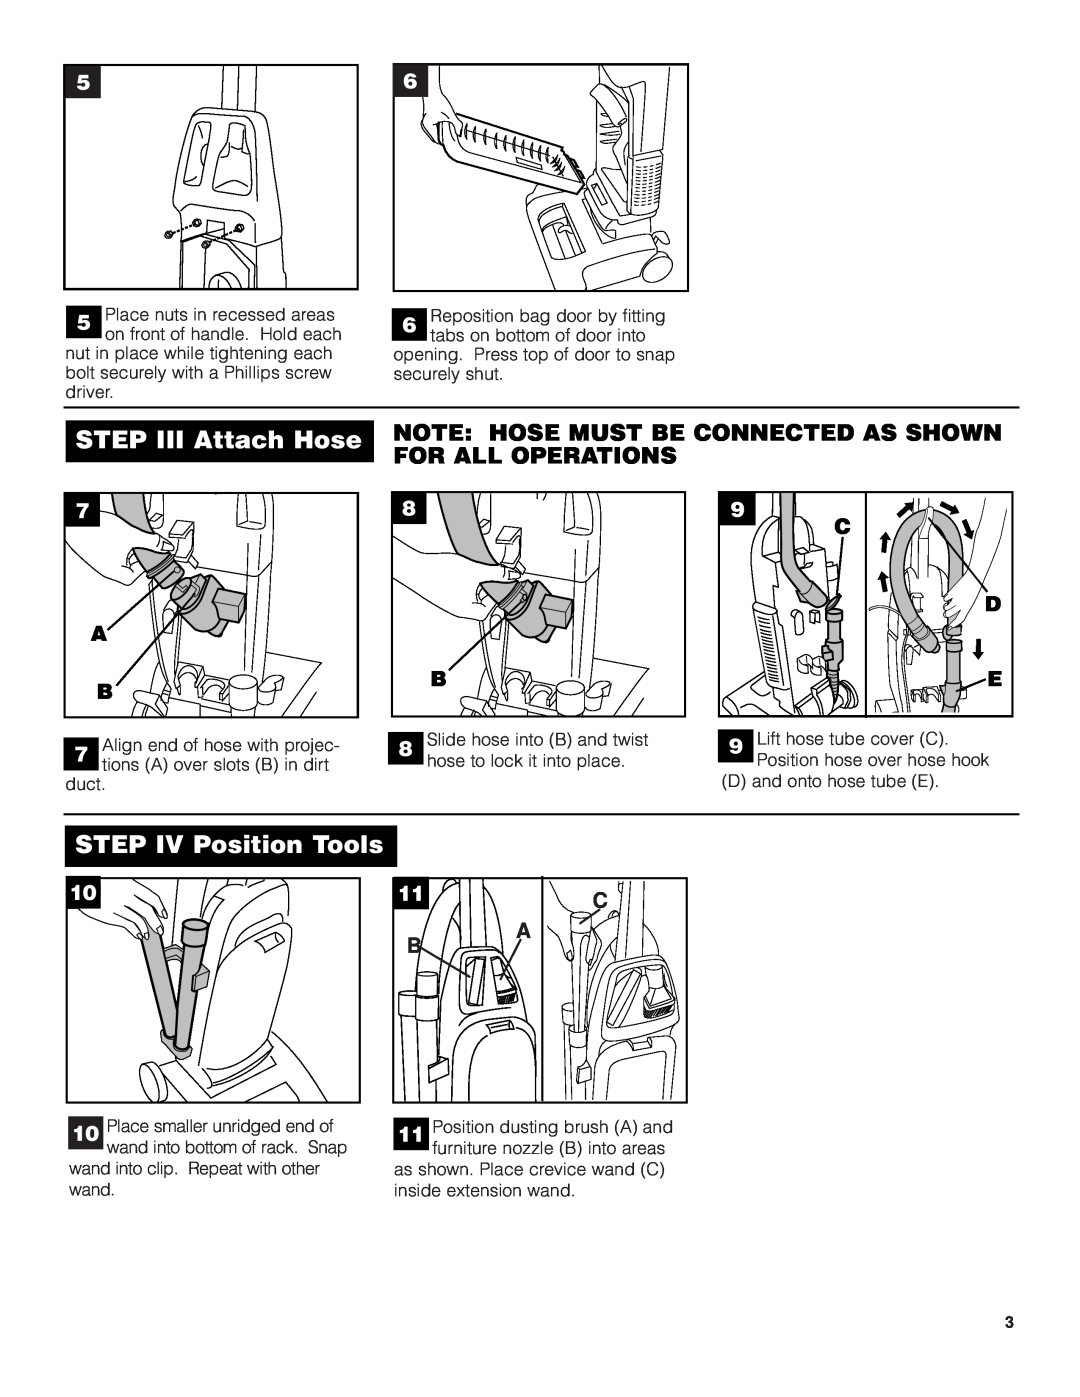 SSS AF9 manual STEP III Attach Hose, STEP IV Position Tools 